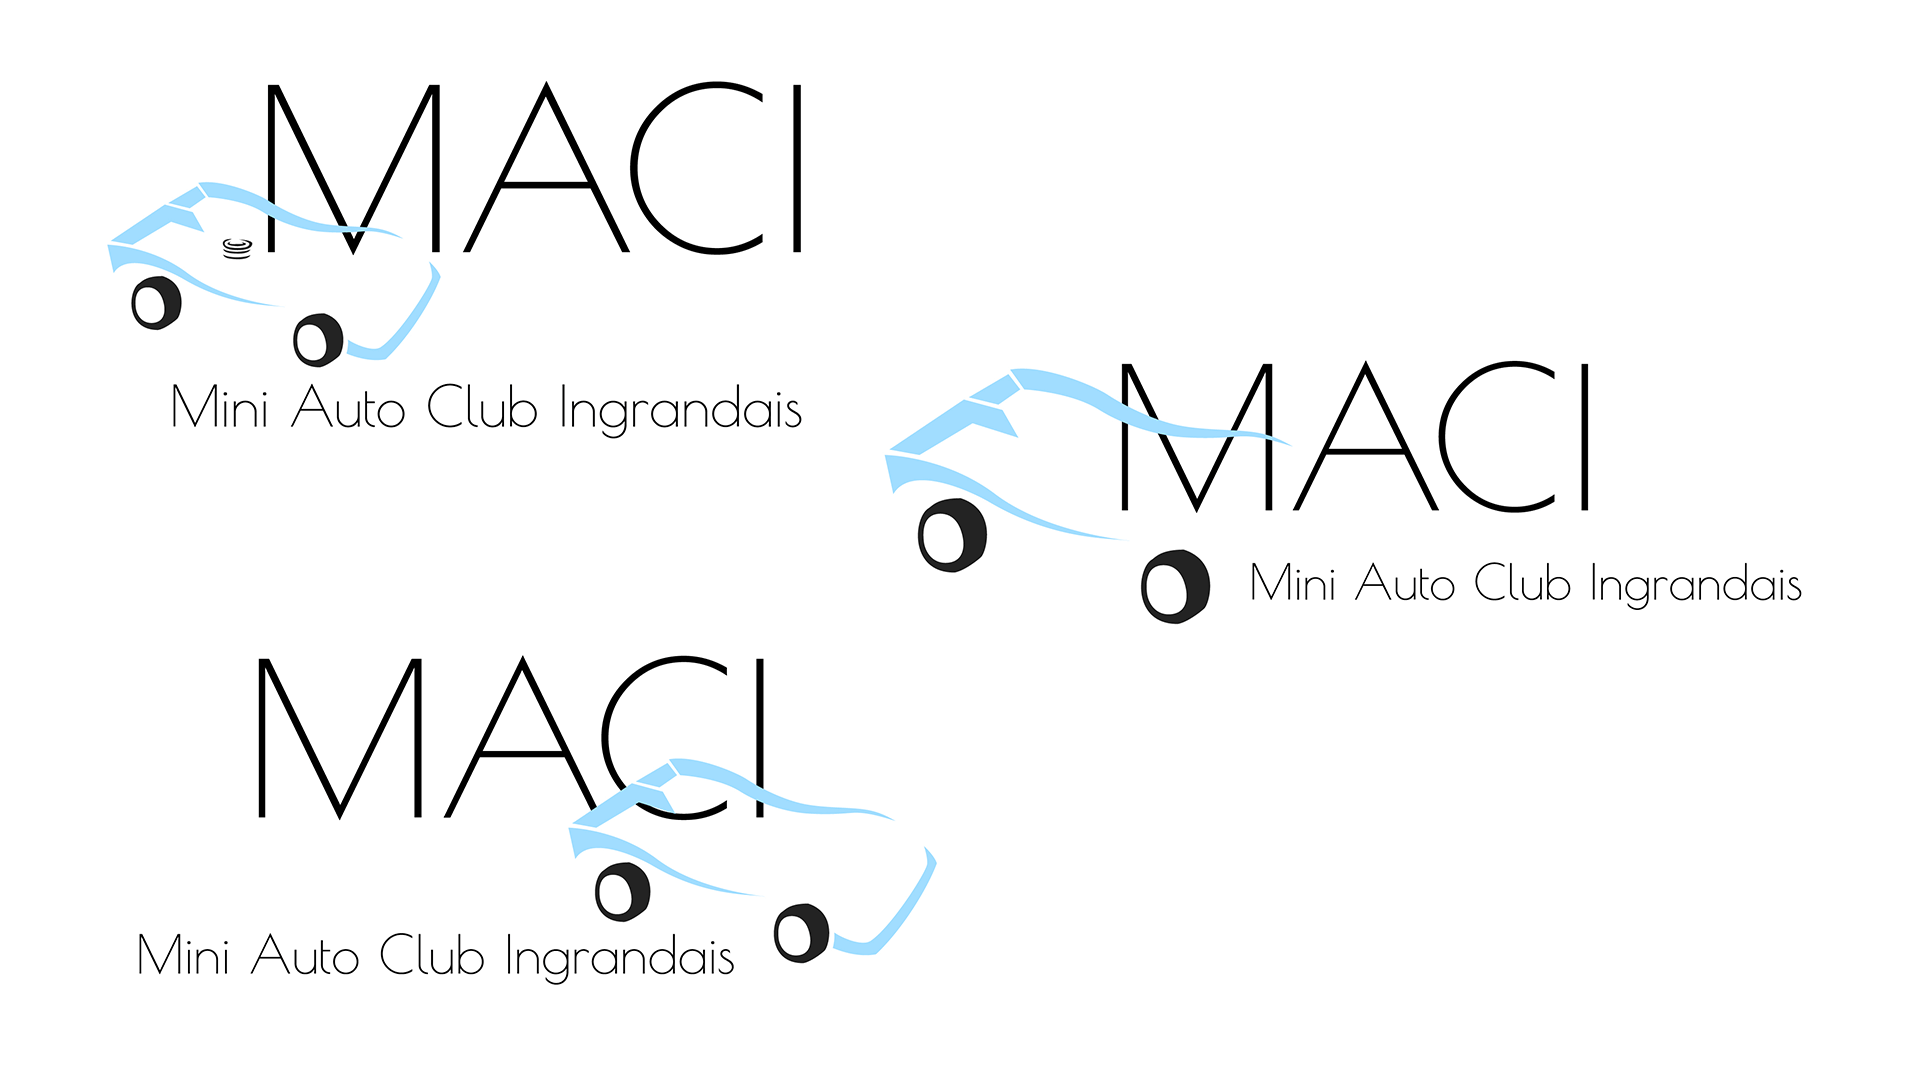 Proposition logo MACI